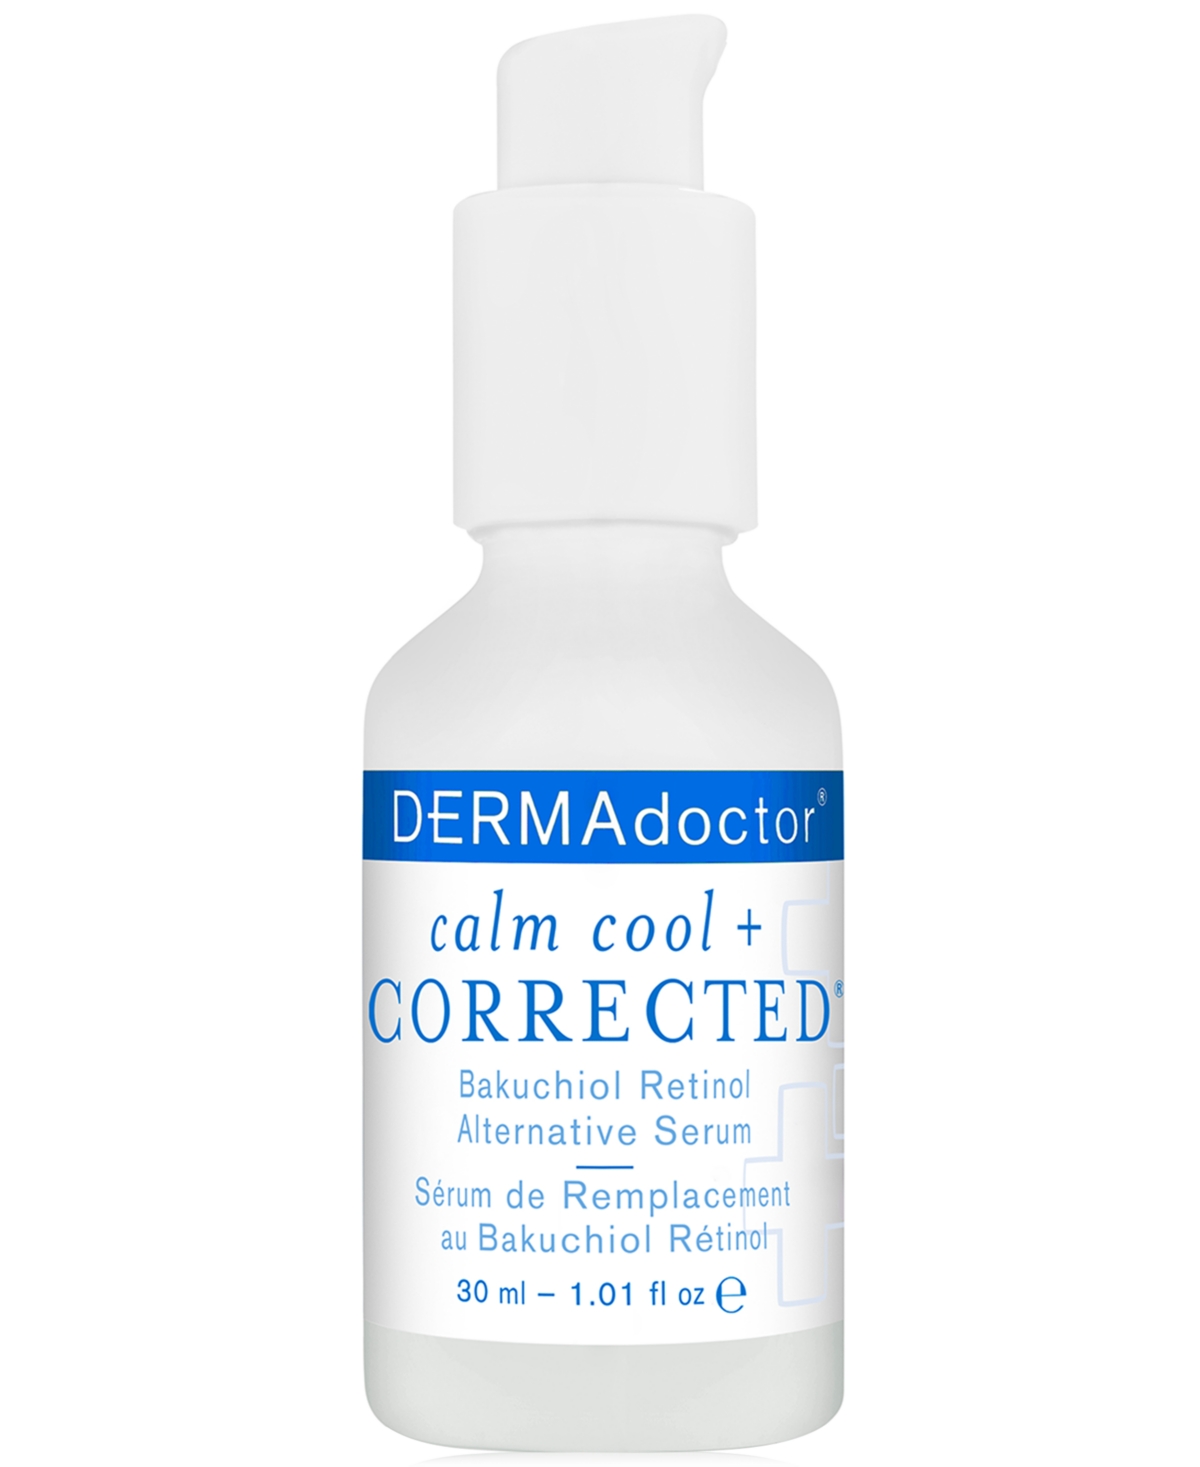 Calm Cool + Corrected Bakuchiol Retinol Alternative Serum